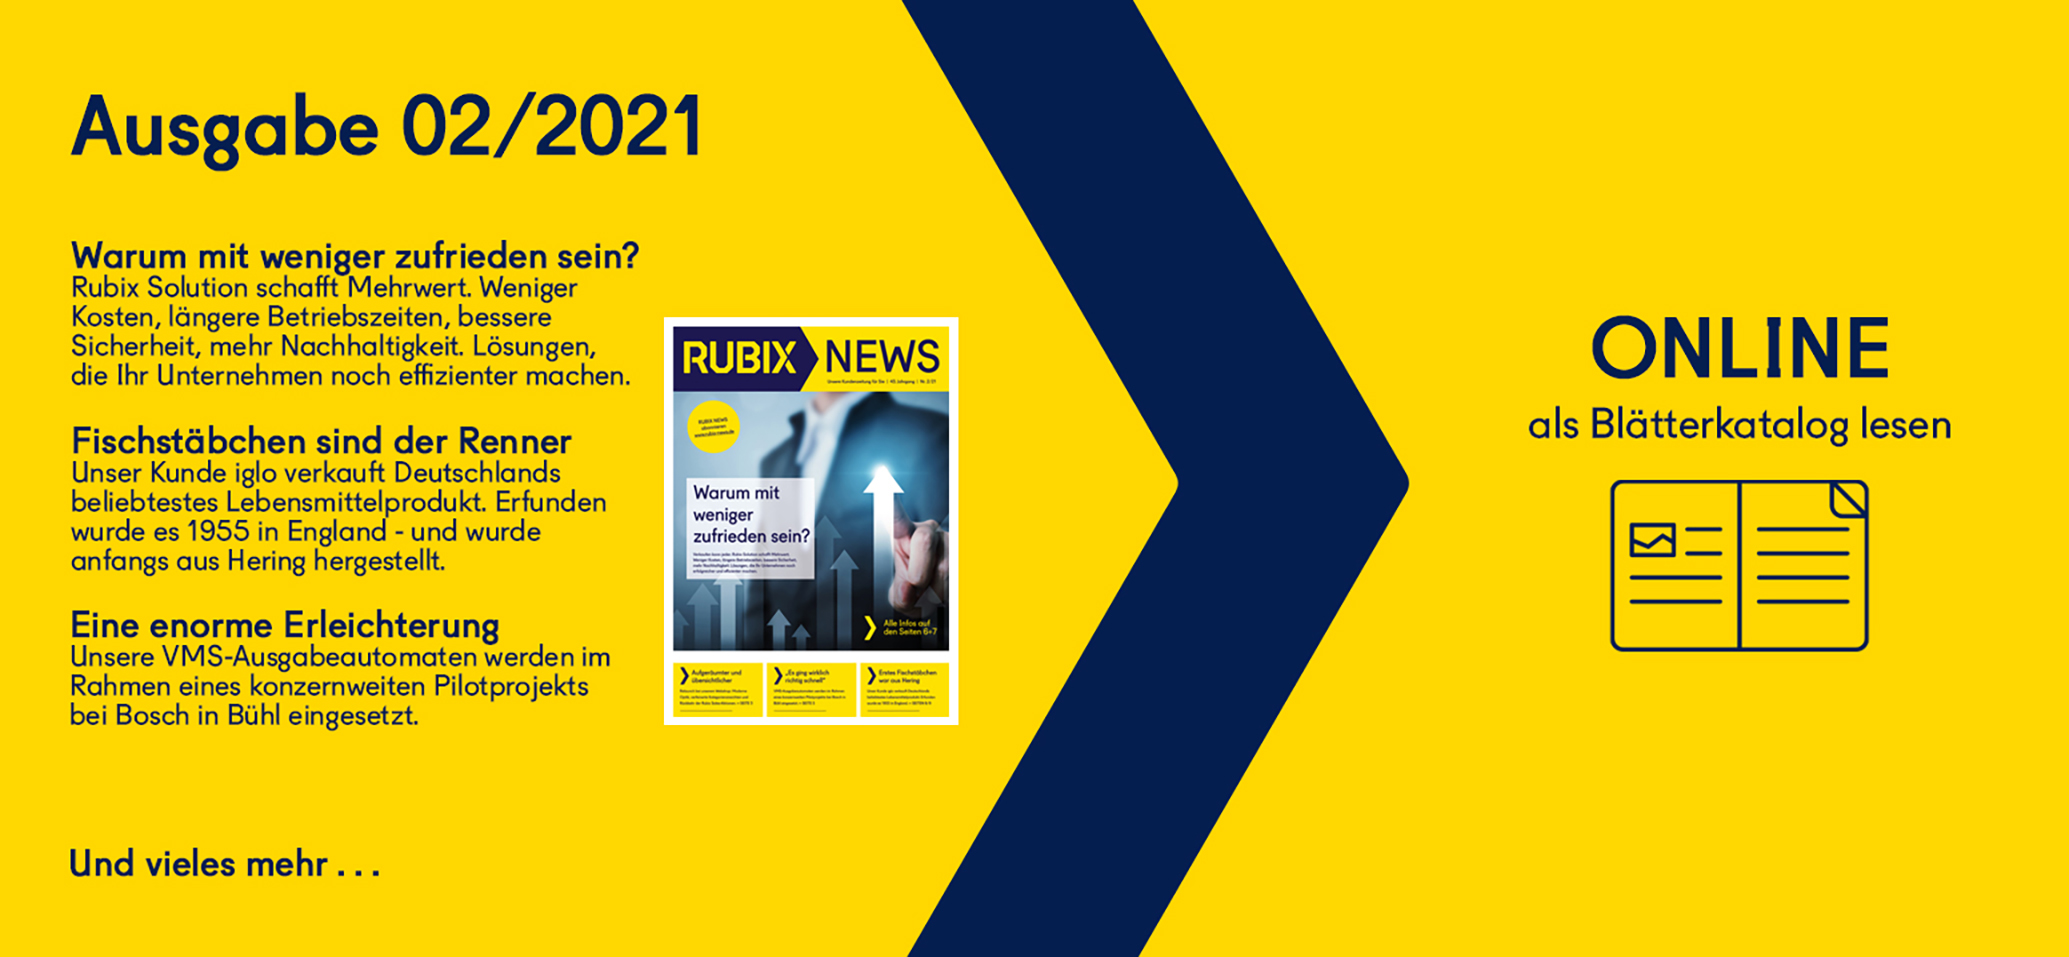 RUBIX NEWS 02/2021